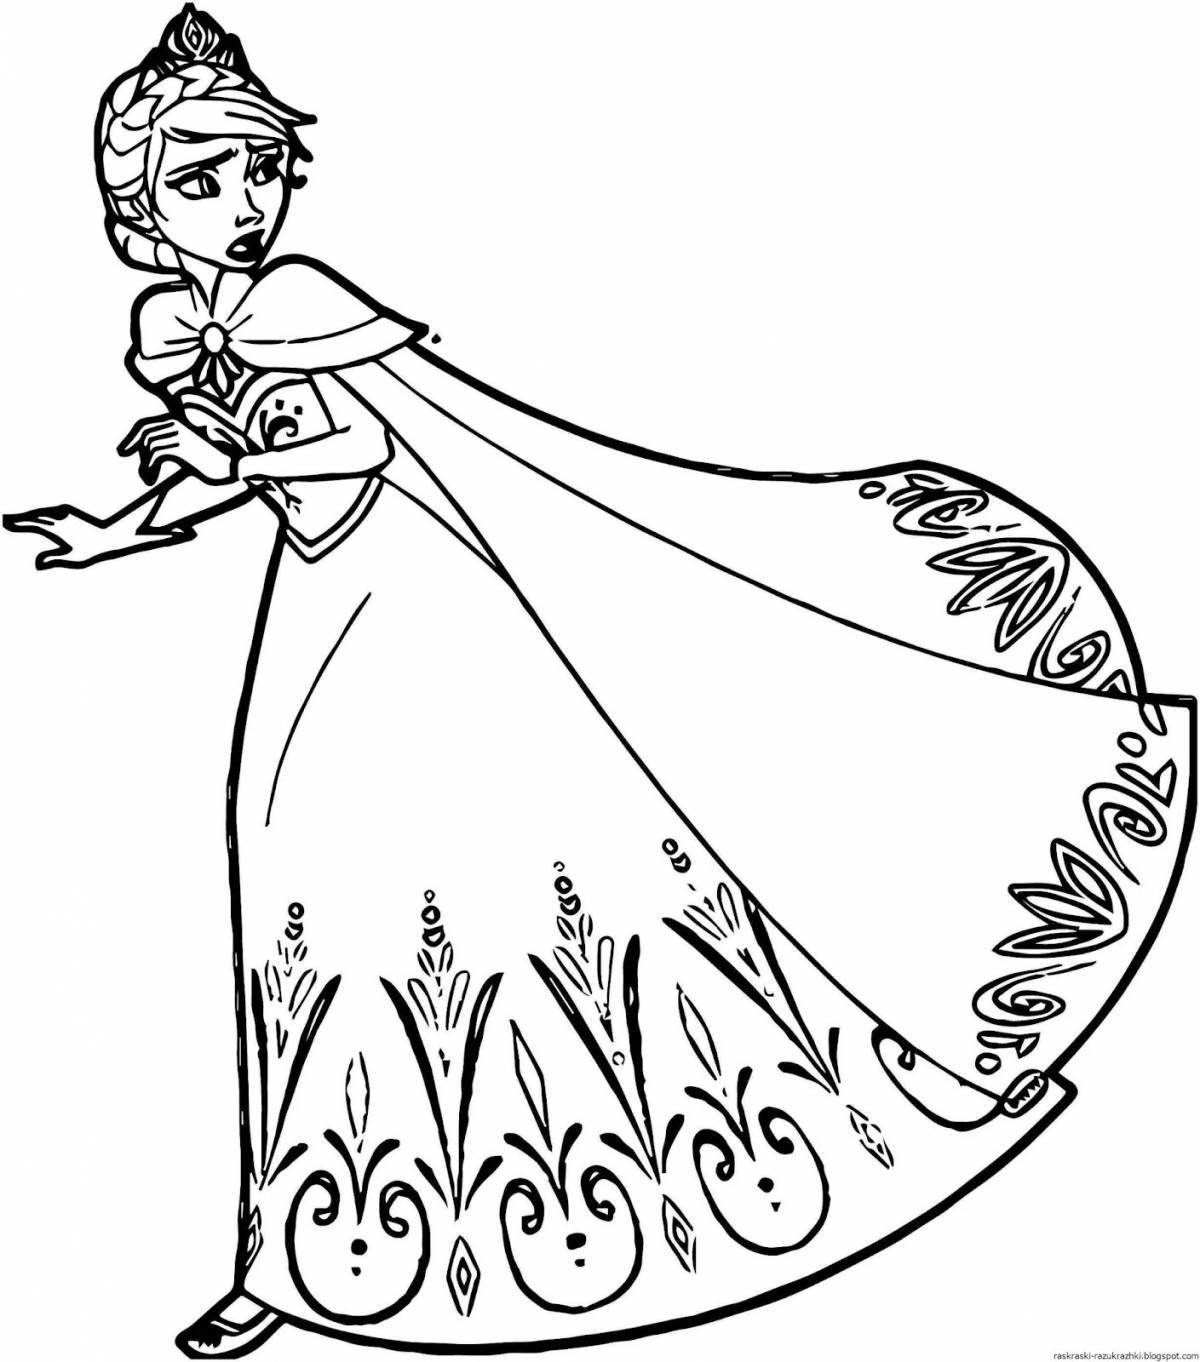 Charming princess marlene coloring book